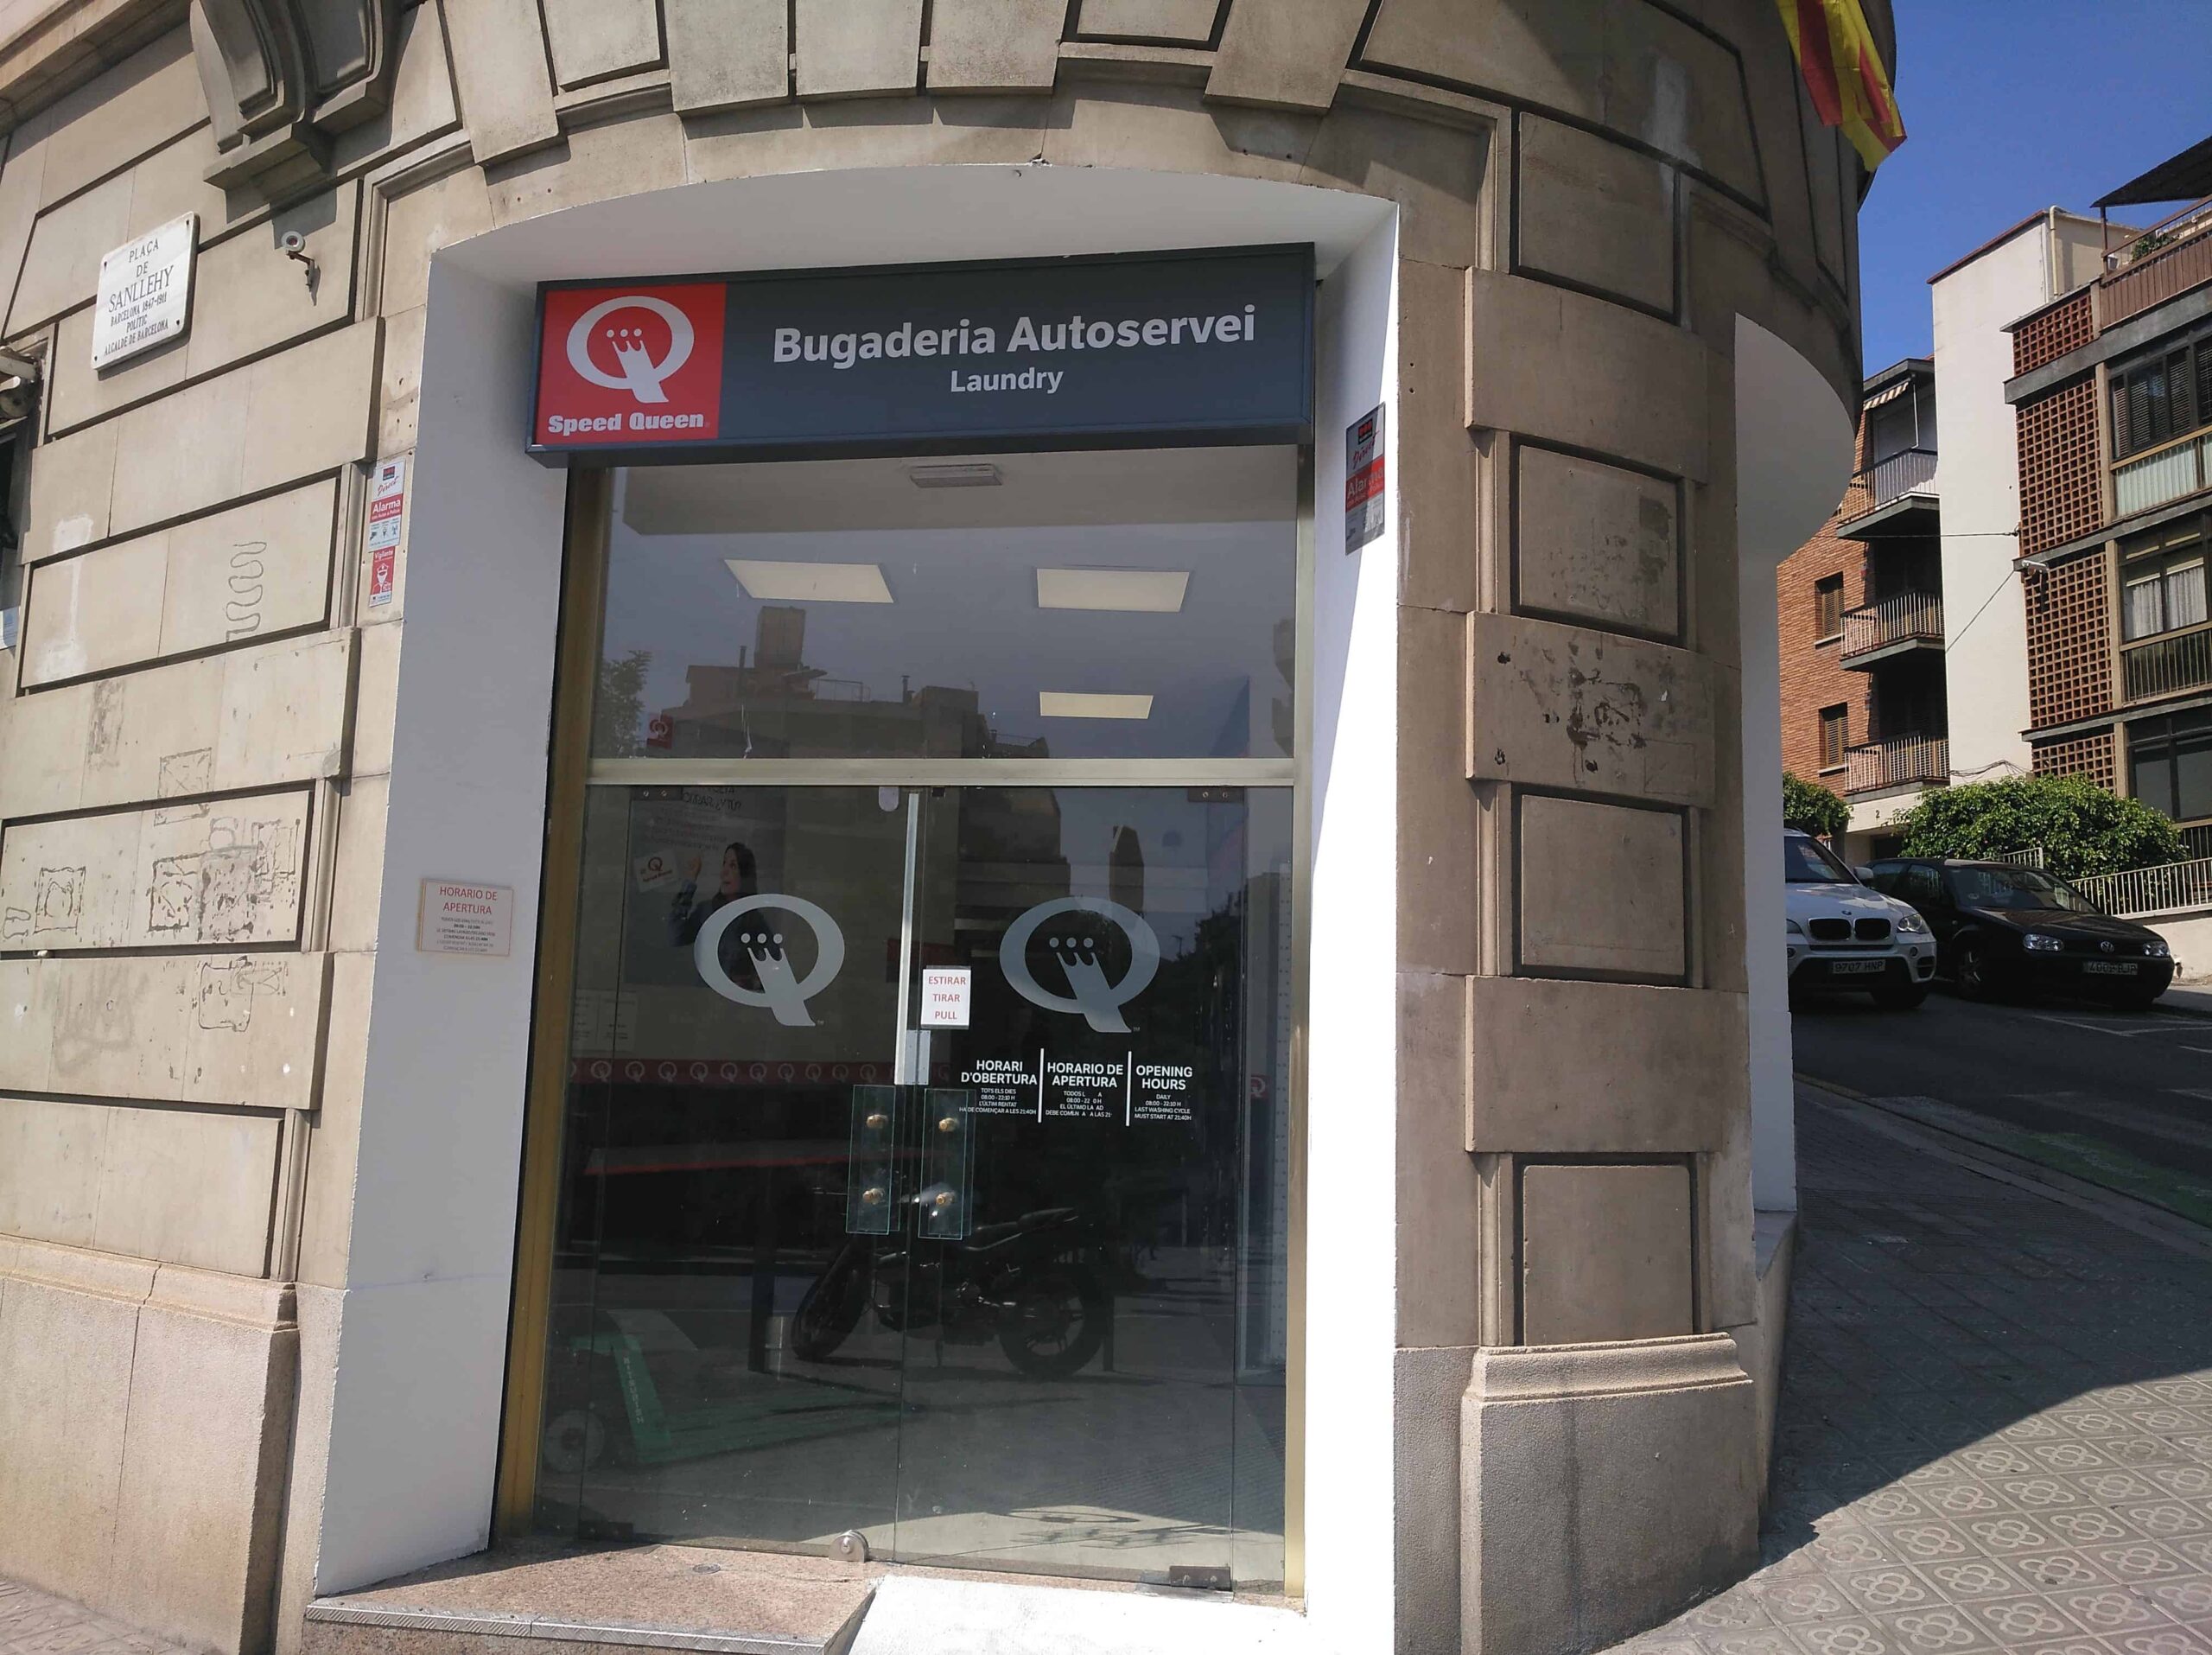 Laundromat Sanllehy in Barcelona - Speed Queen Investor